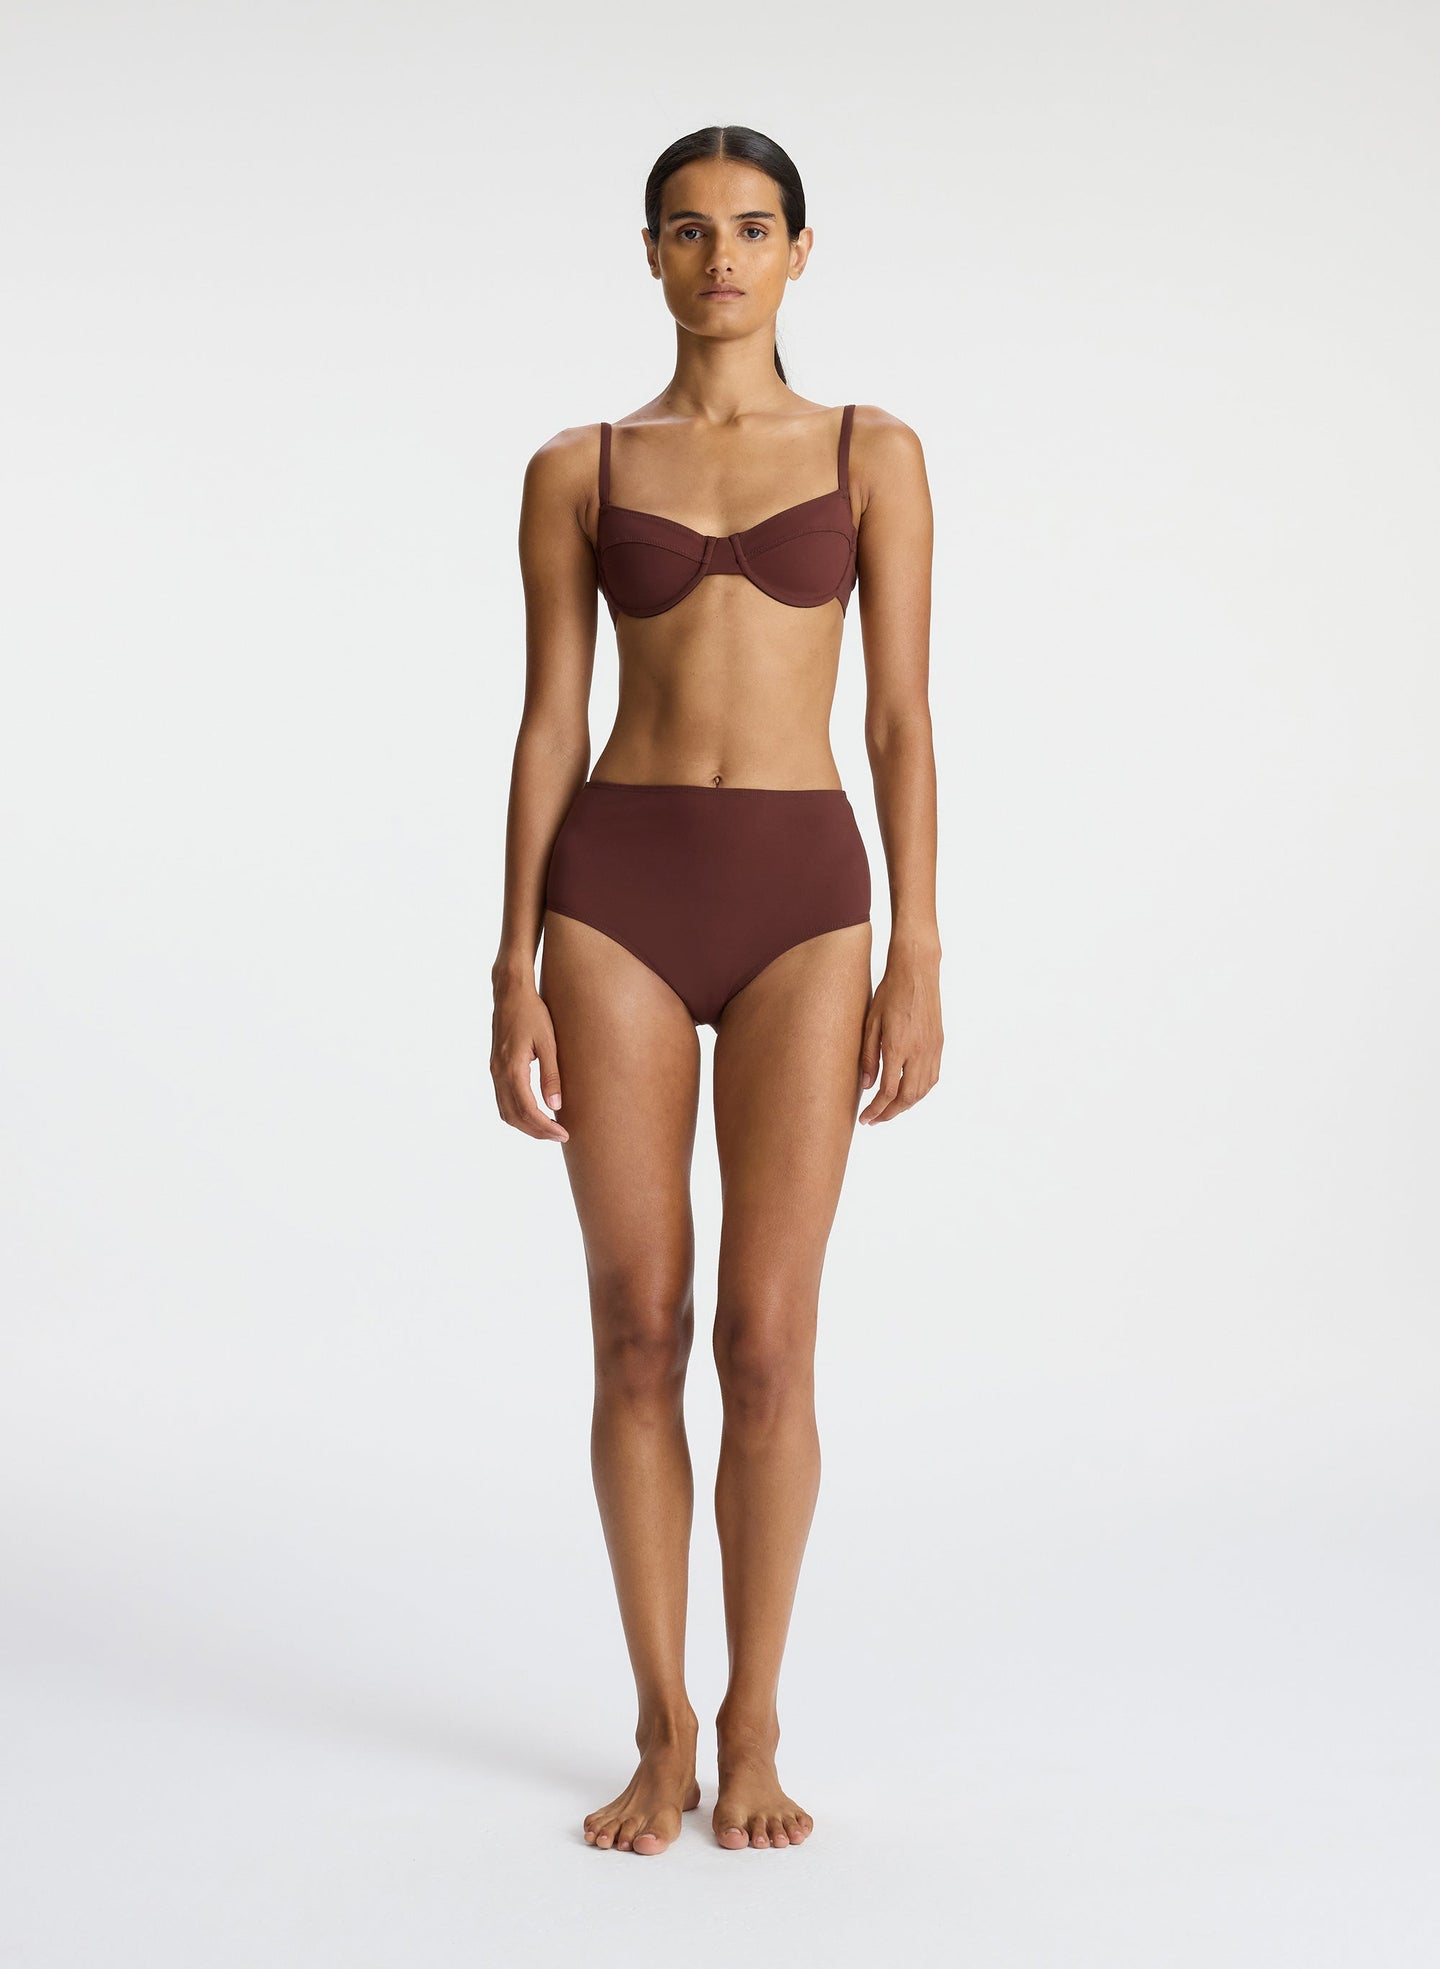 front view of woman wearing brown bikini set